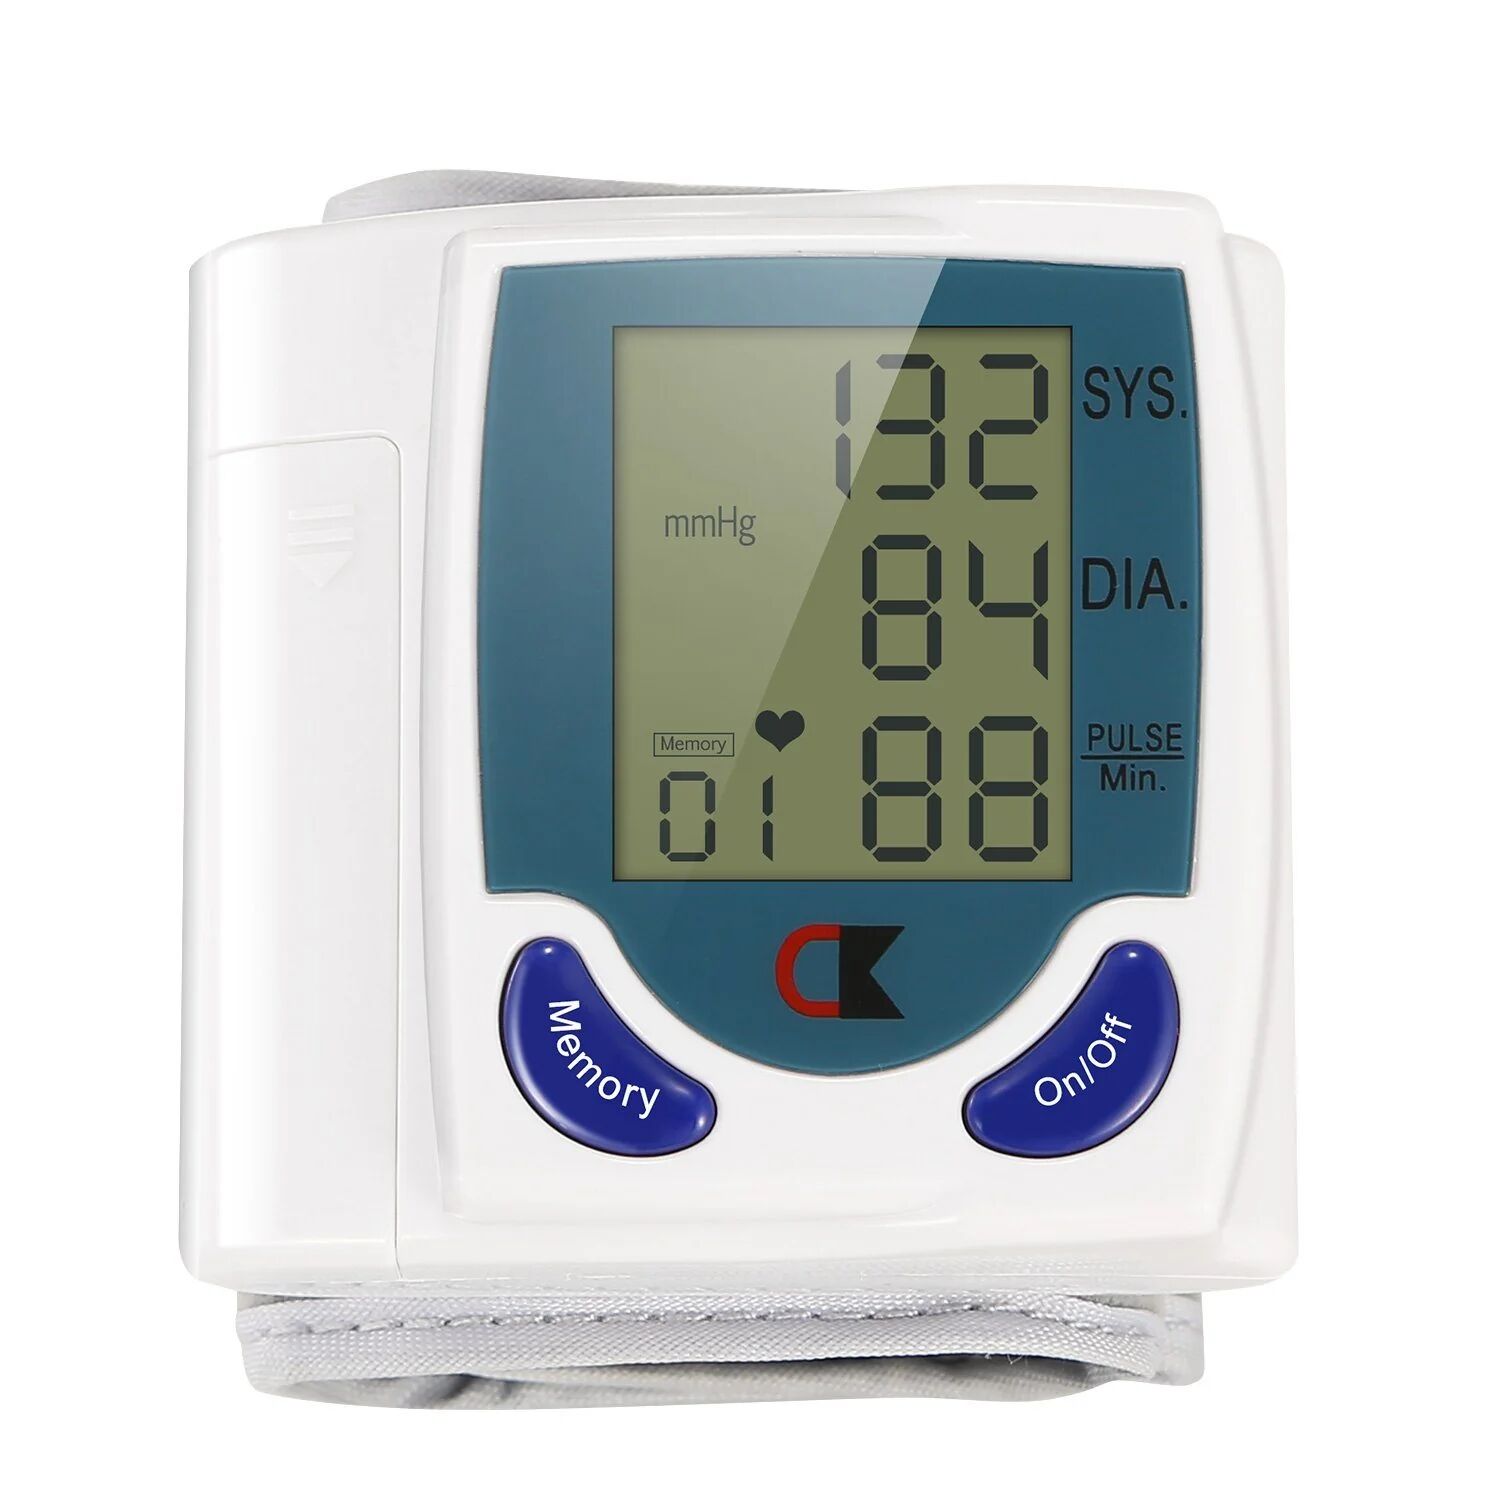 DailySale Digital Wrist Blood Pressure Monitor